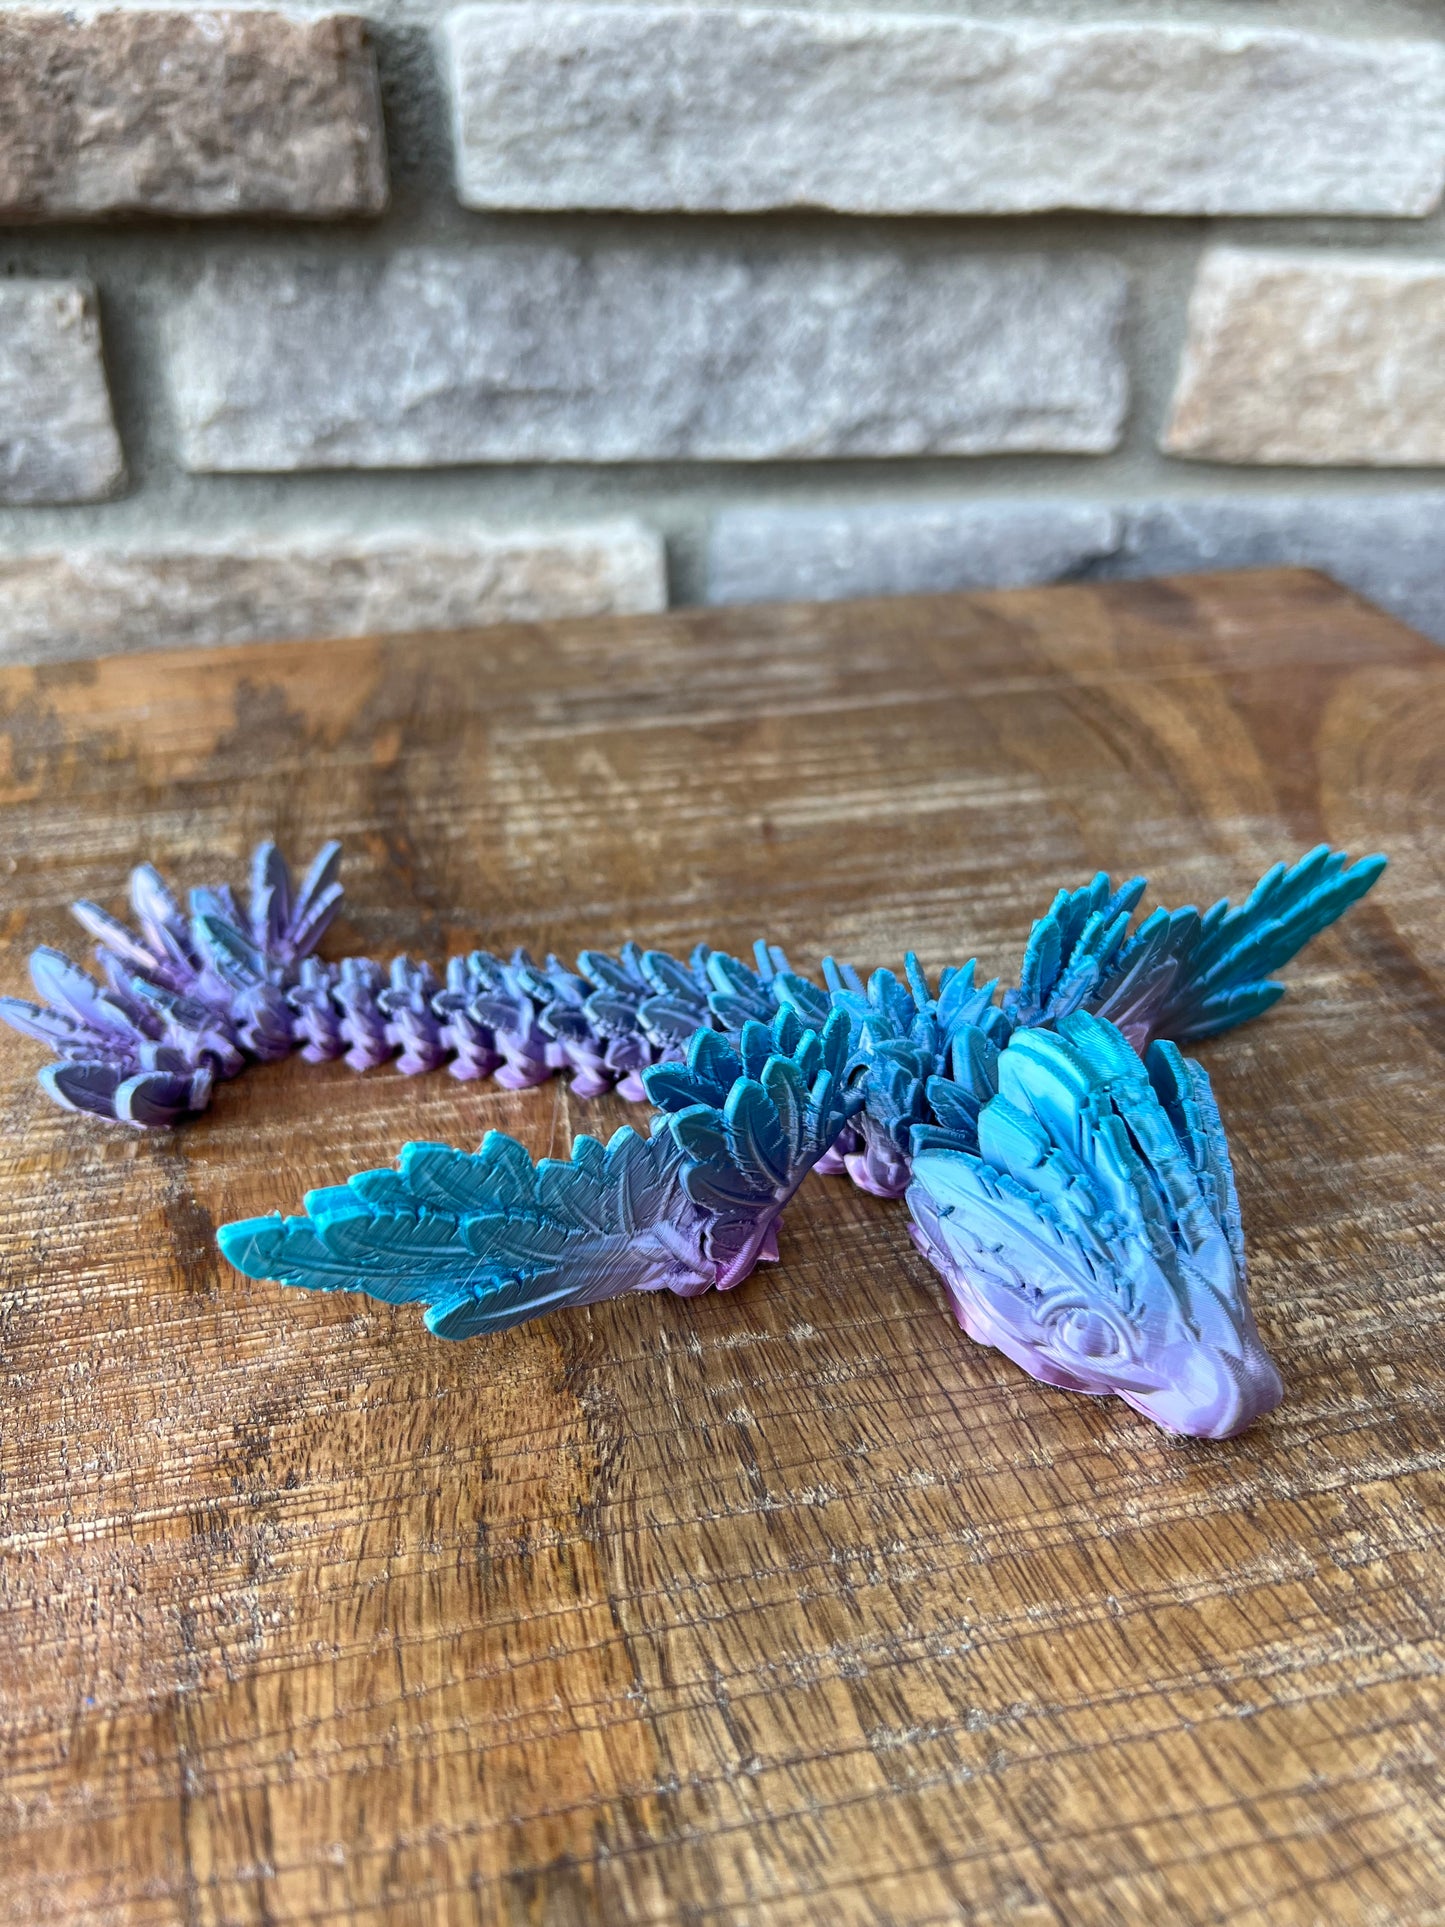 Baby MINI Flying Serpent | 3D Printed | Articulated Dragon | Custom Figurine | Fidget Toy